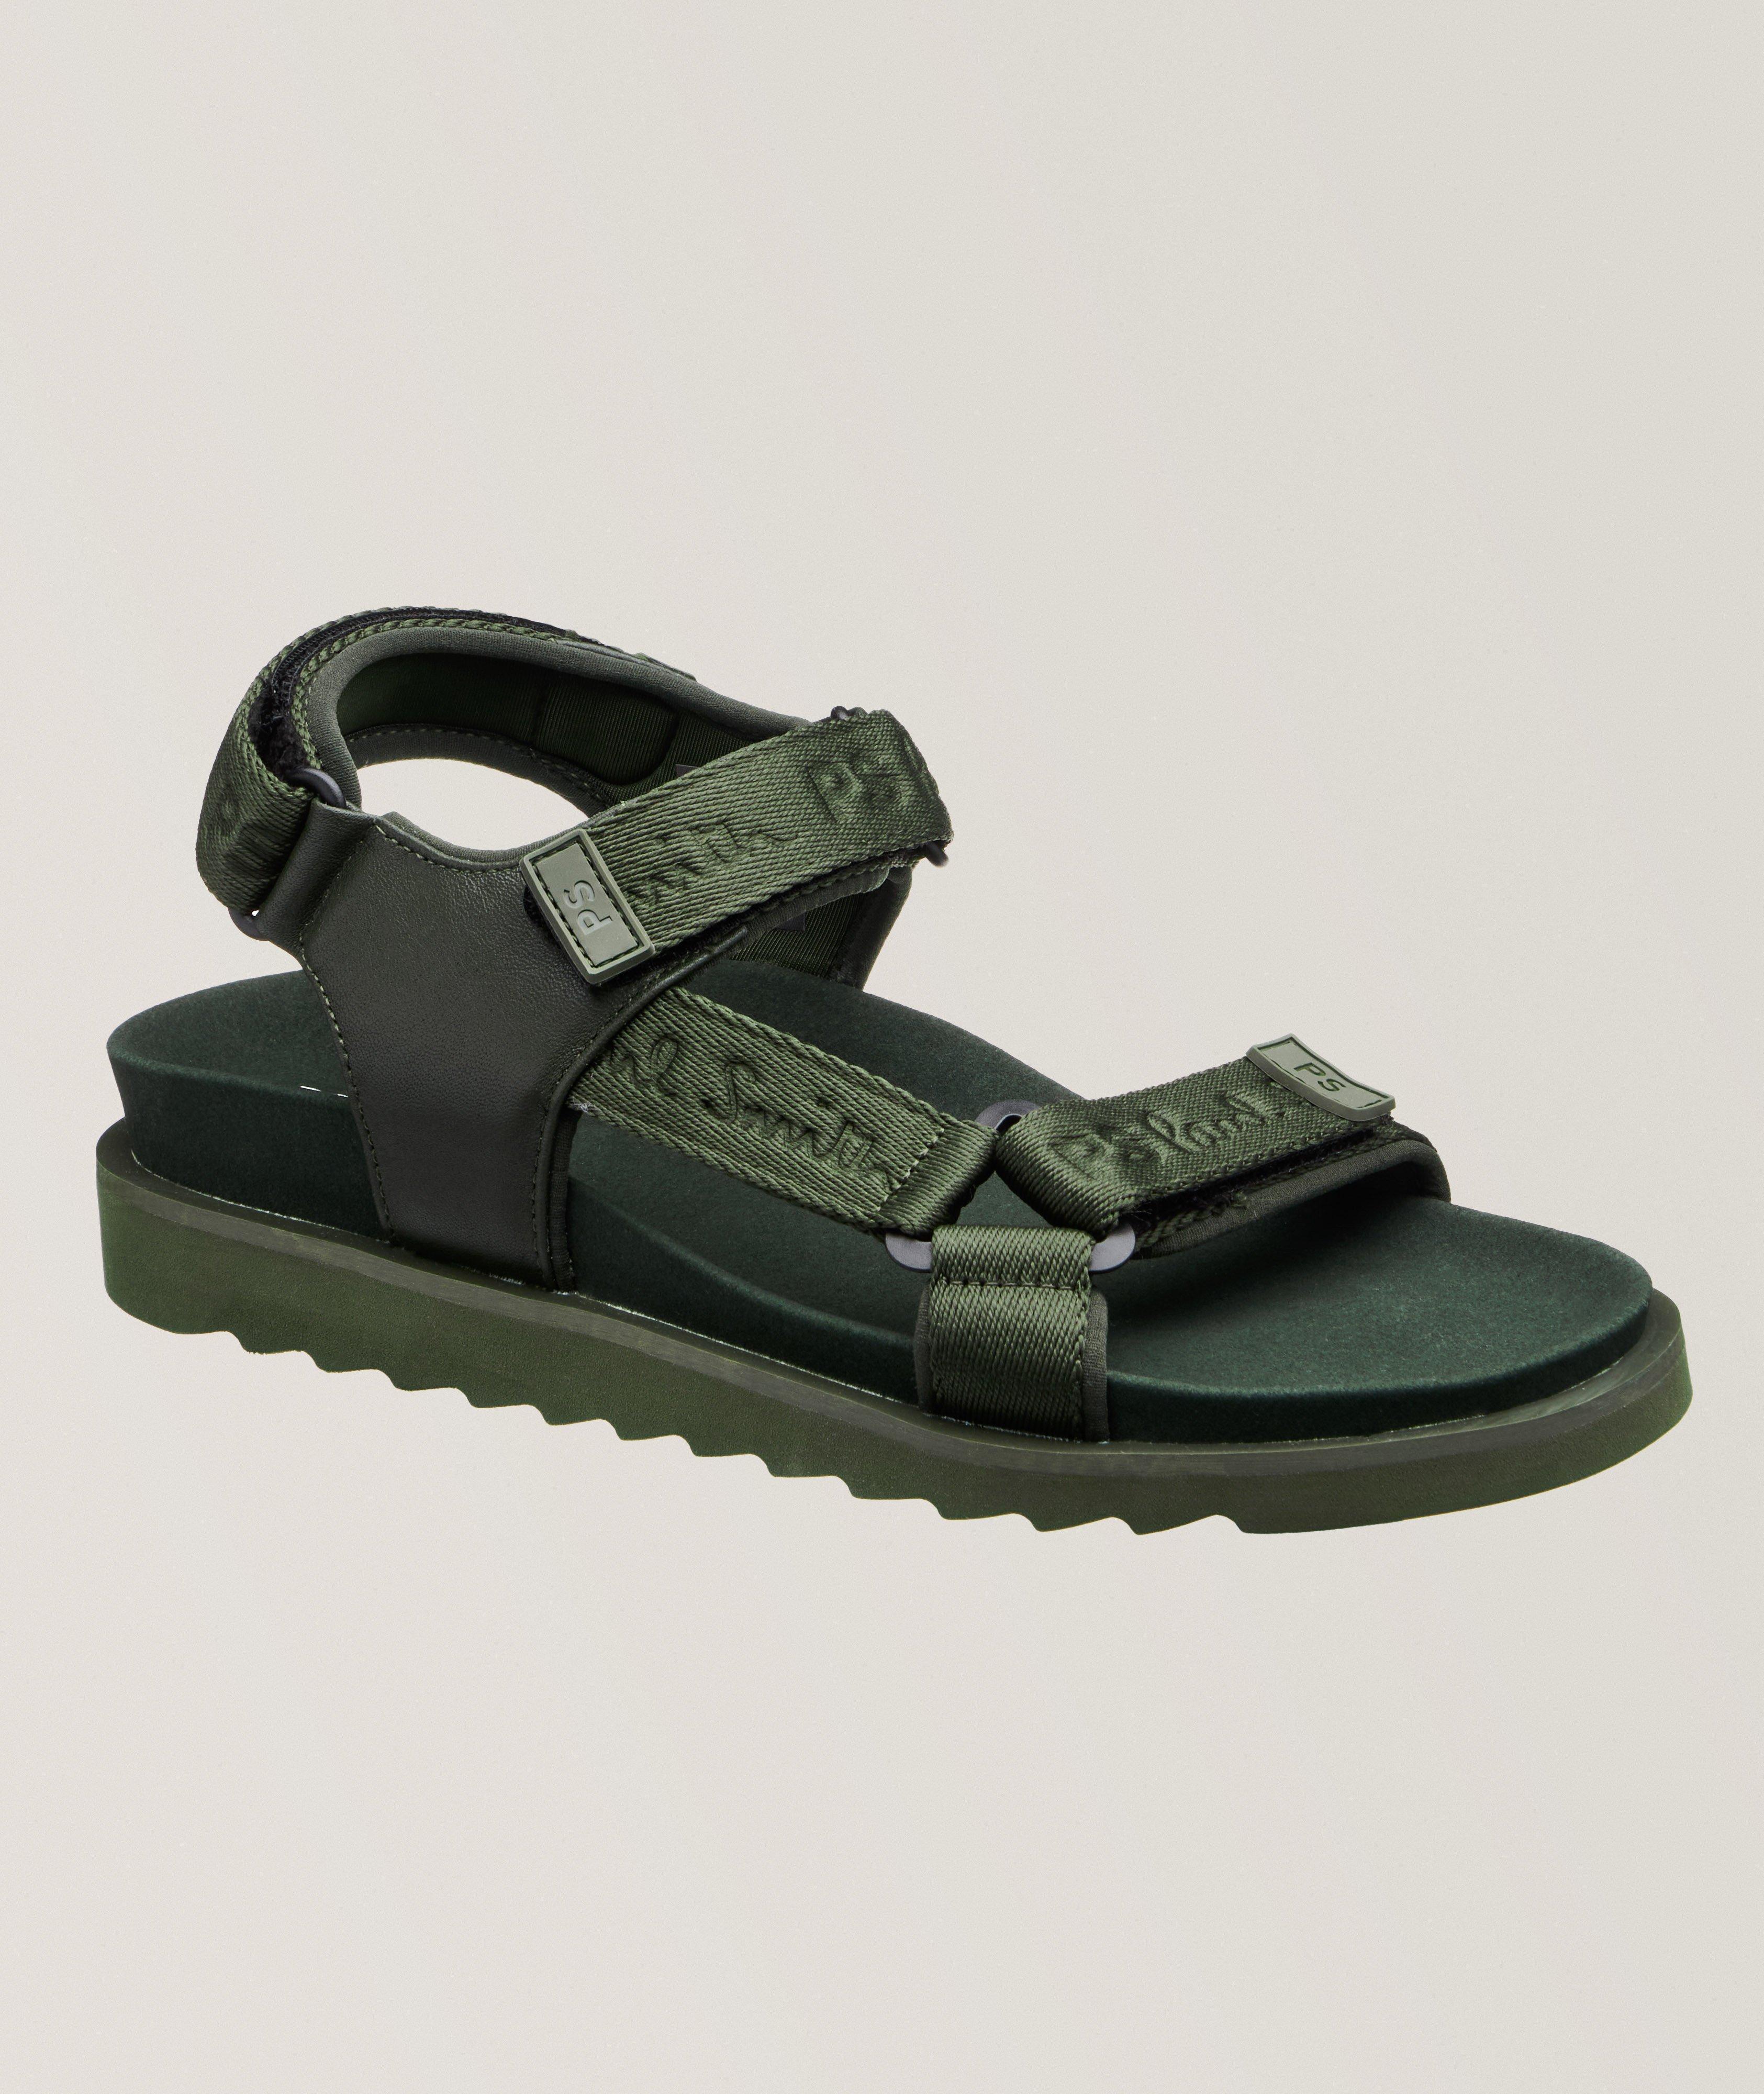 Dorado Suede & Leather Sandals image 0